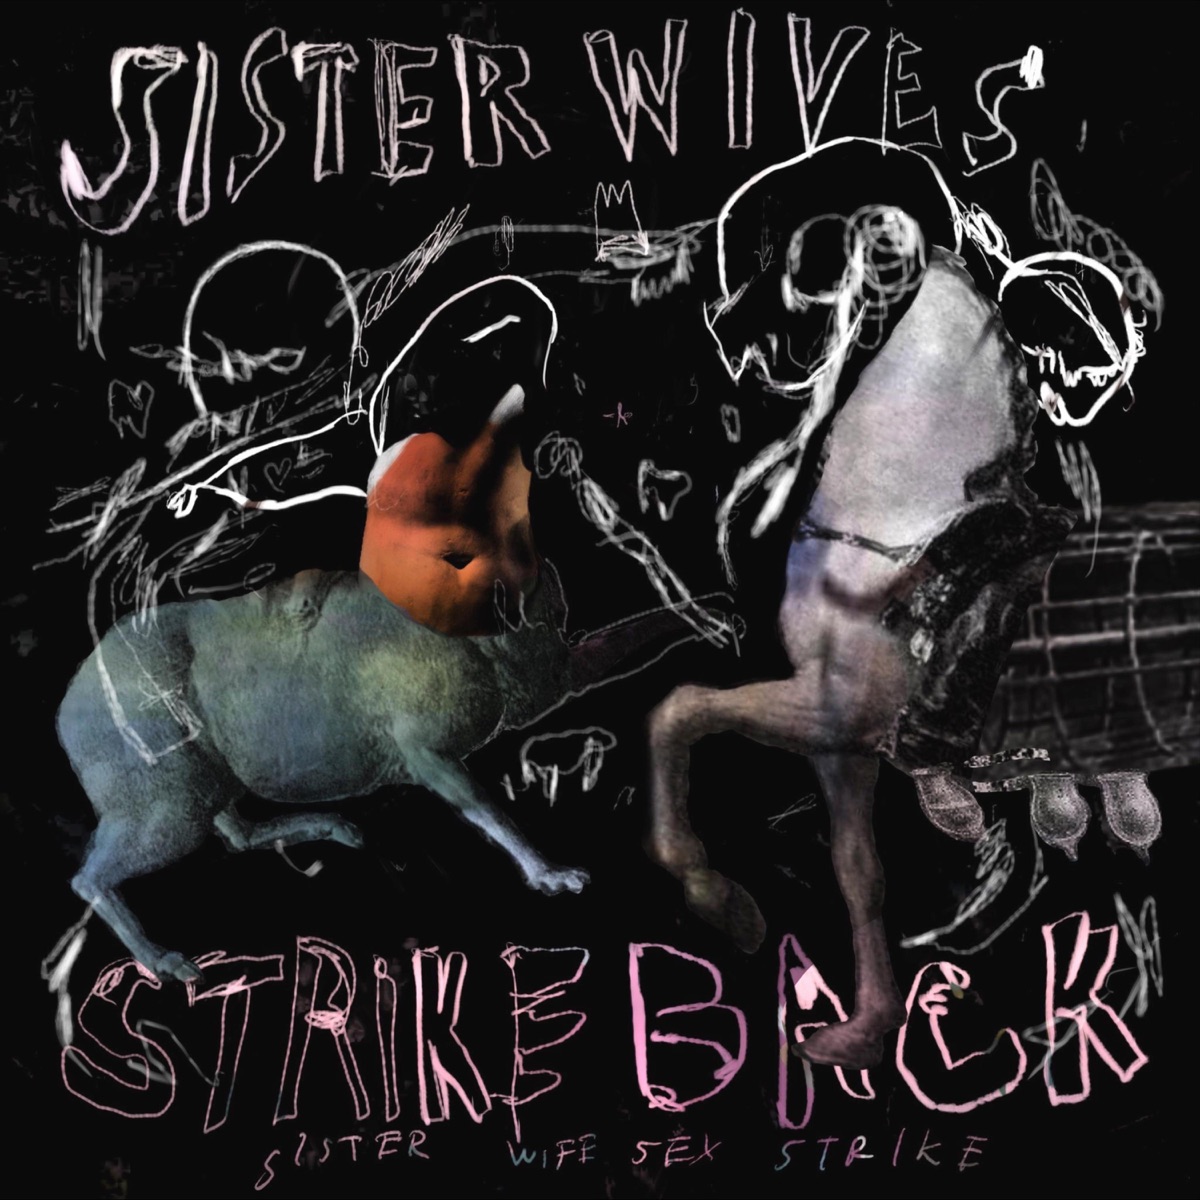 Sister Wives Strike Back by Sister Wife Sex Strike on Apple Music